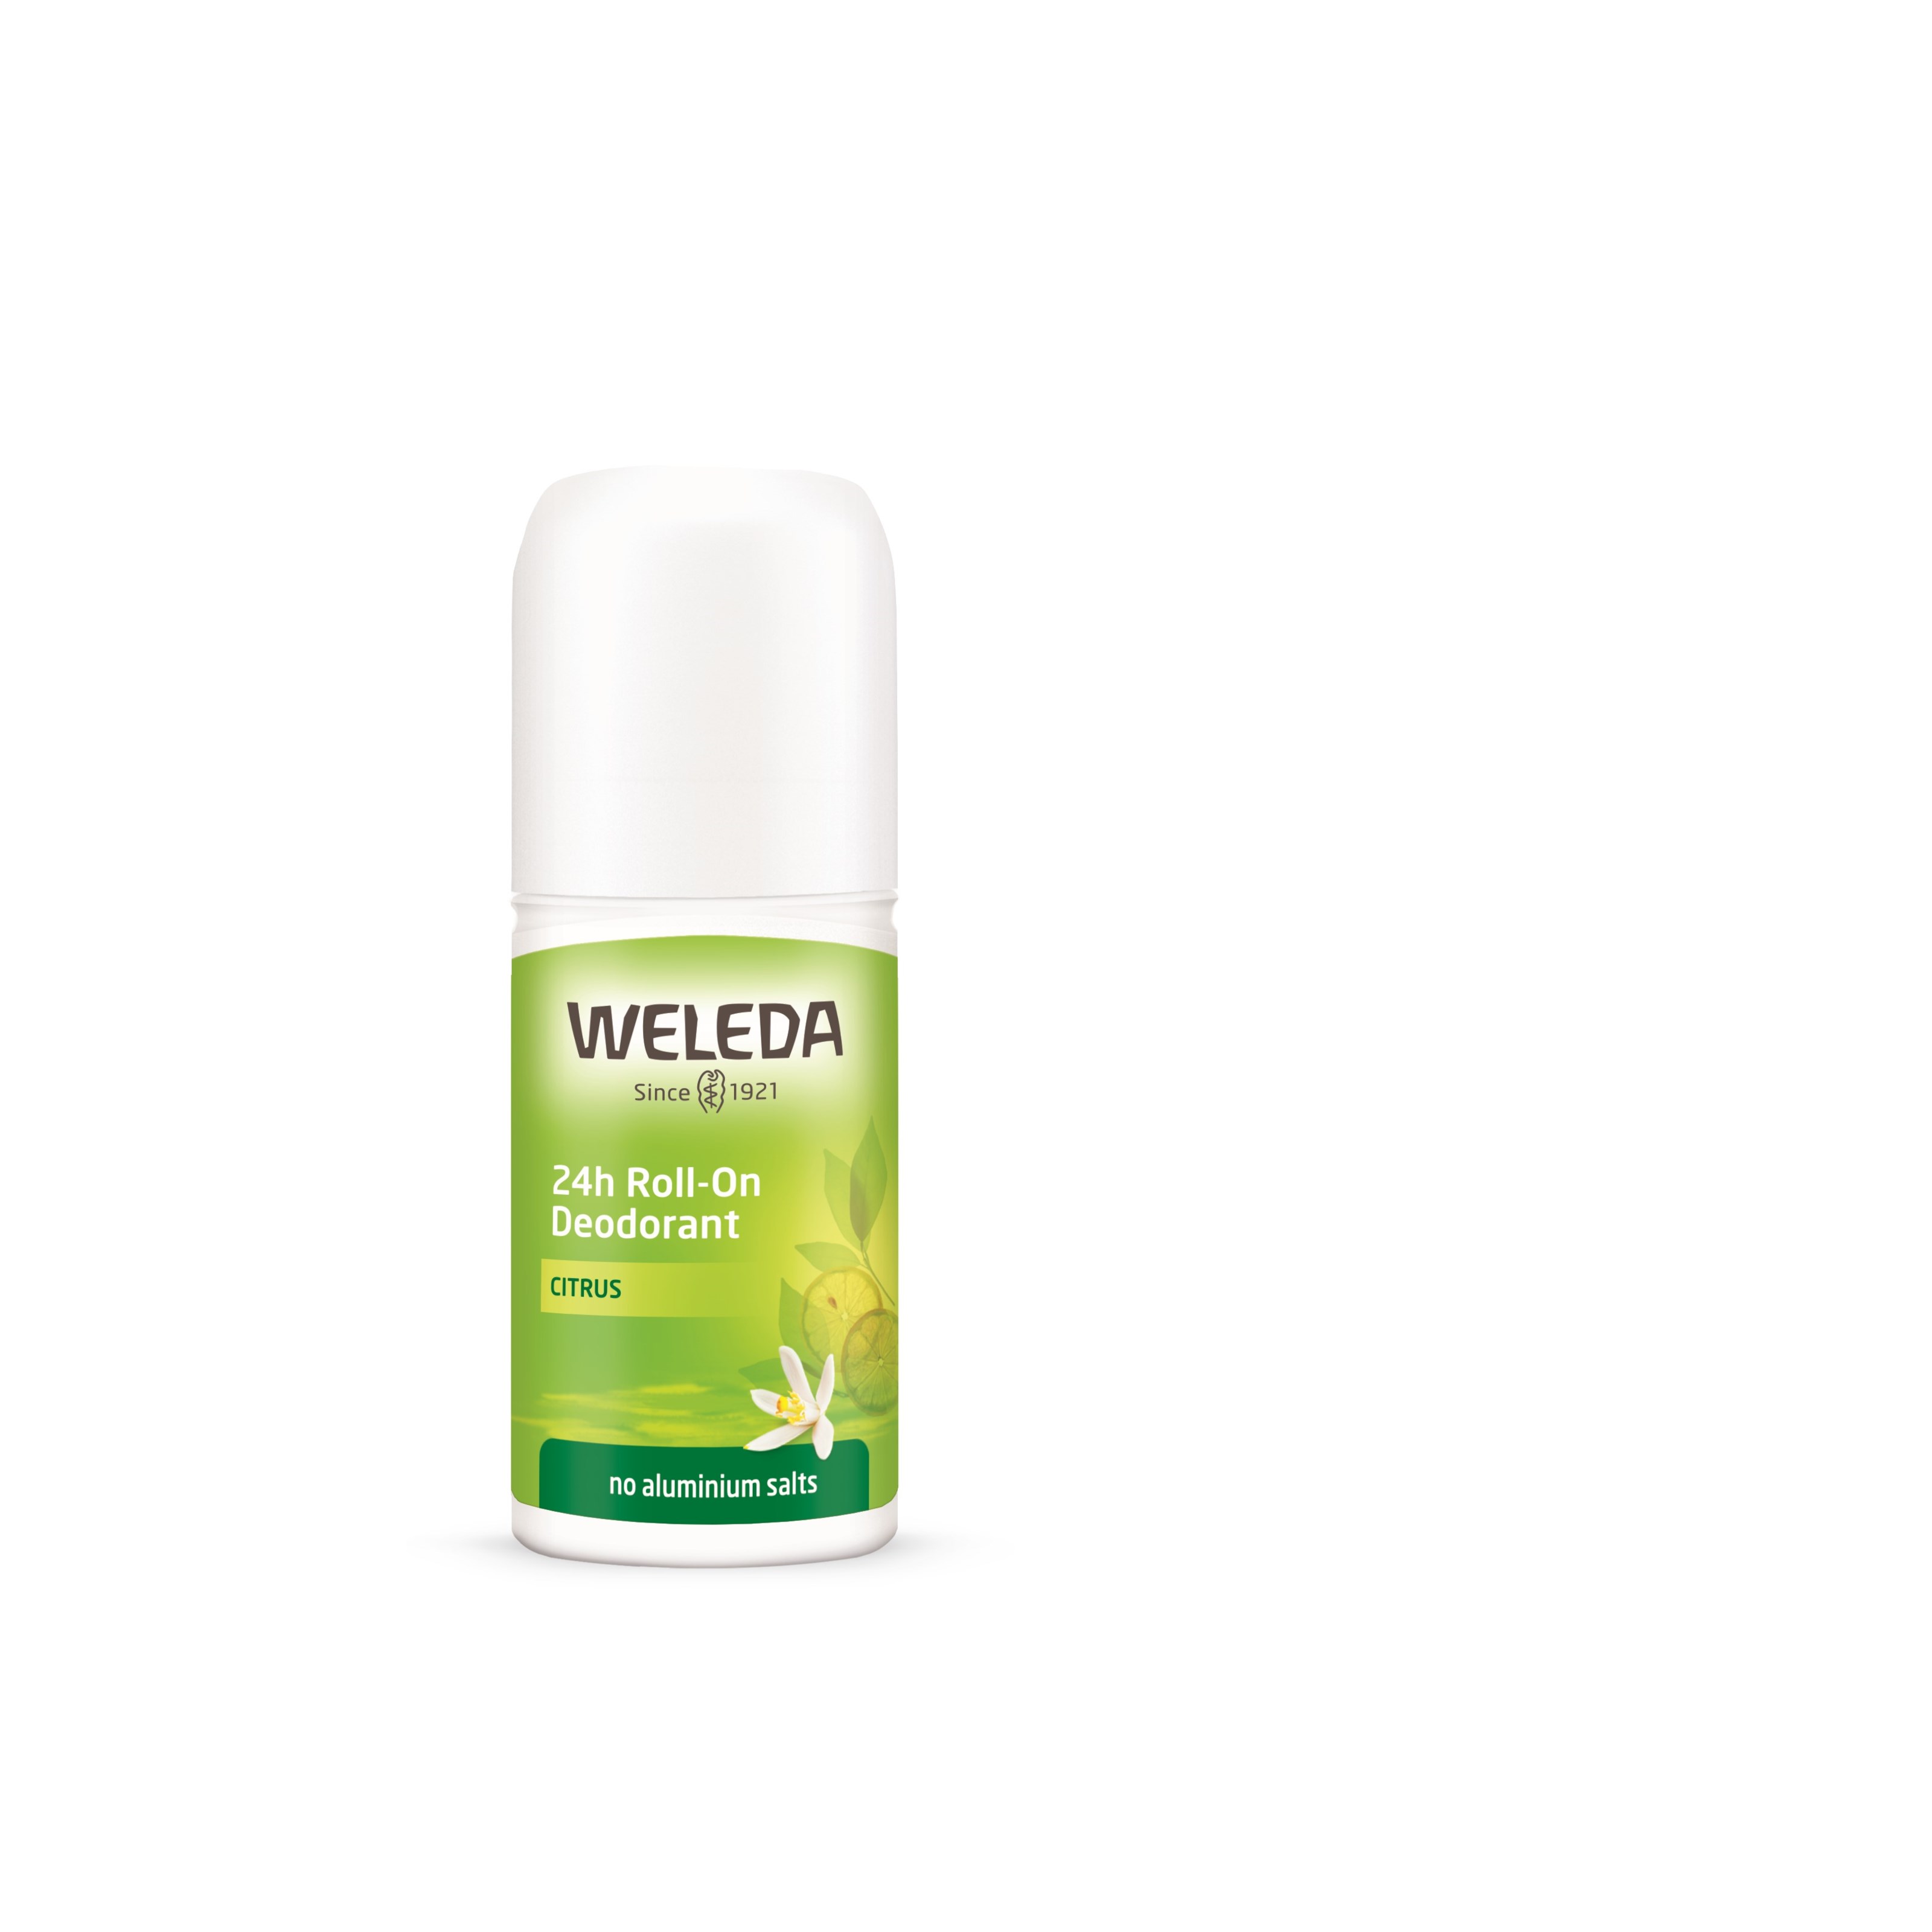 Läs mer om Weleda Citrus 24h Roll-On Deodorant